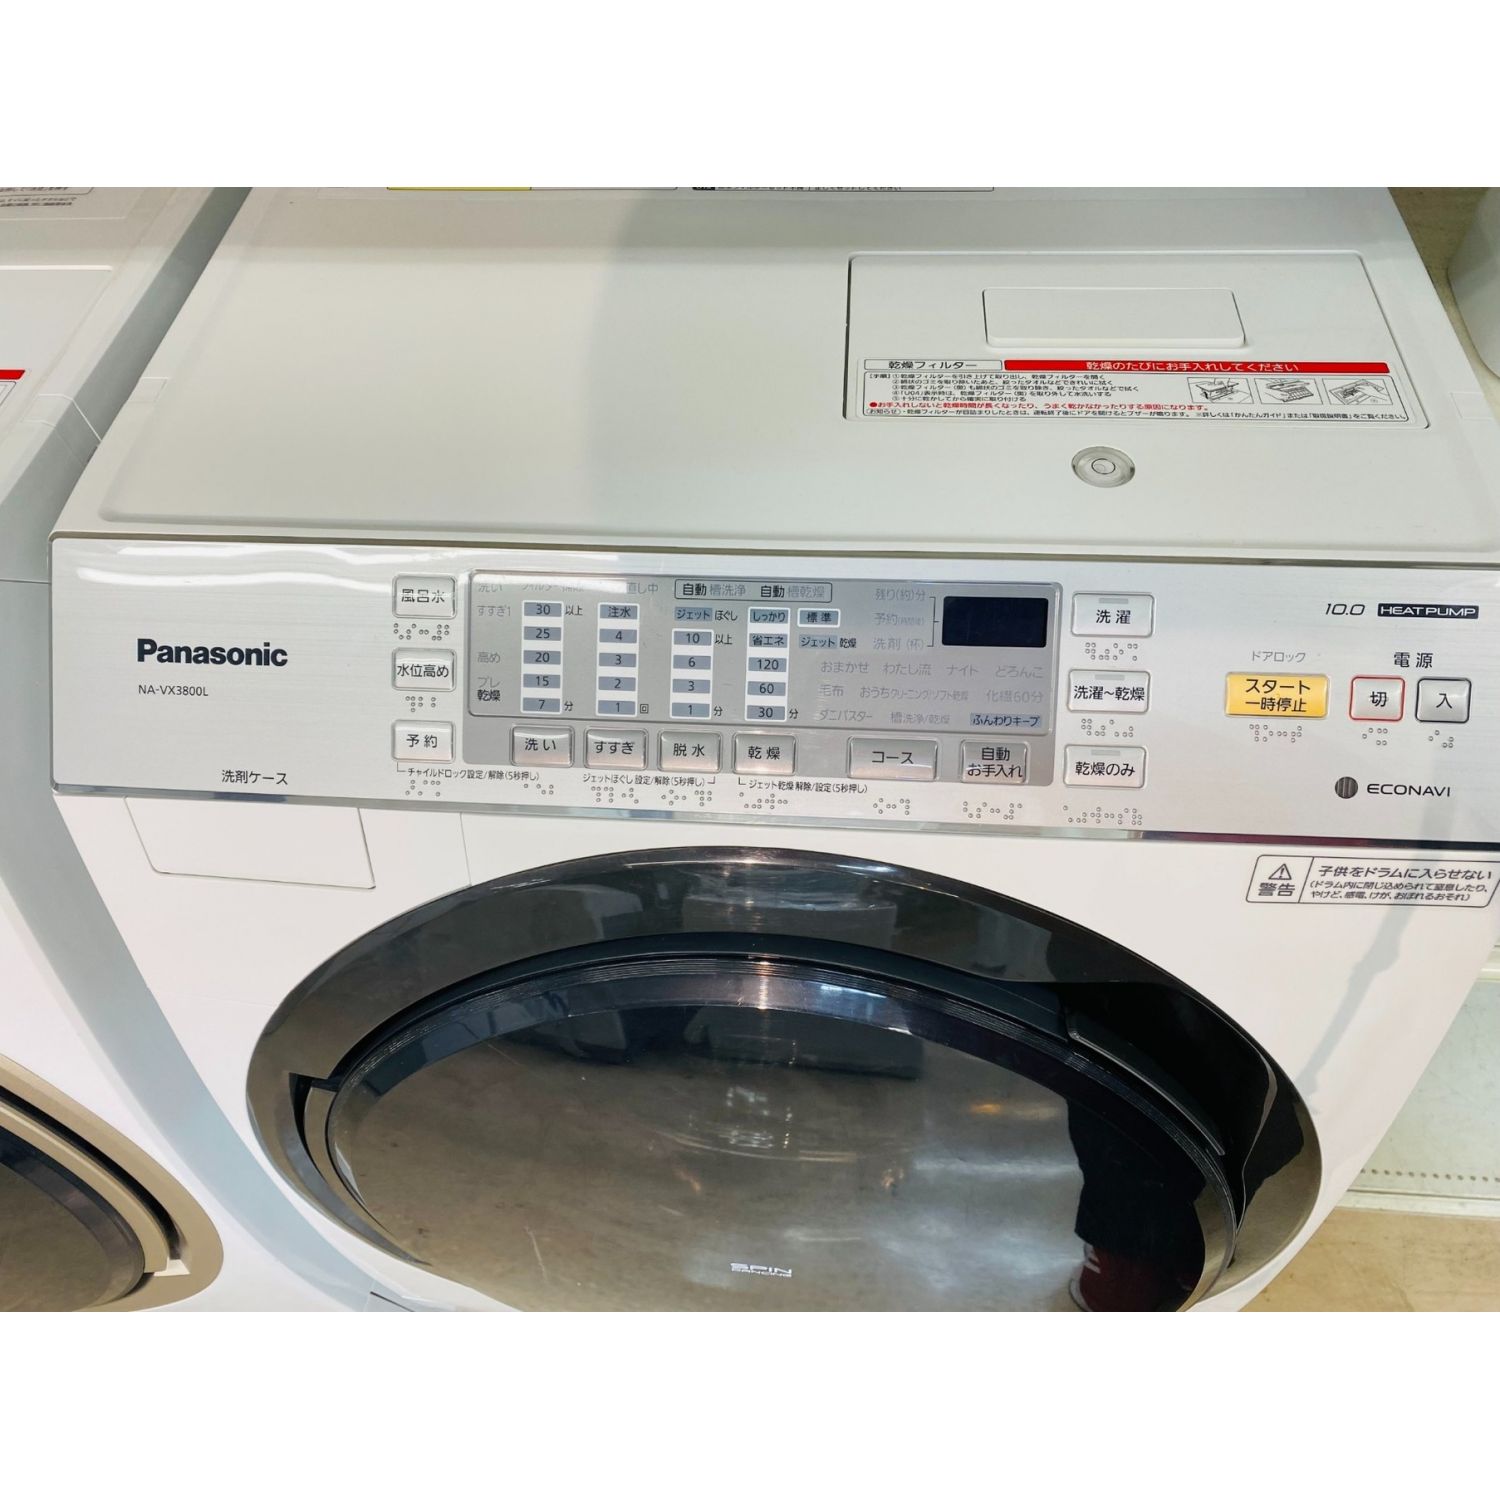 Panasonic NA-VX3600Lドラム式洗濯機 ヒートポンプ式 - 洗濯機